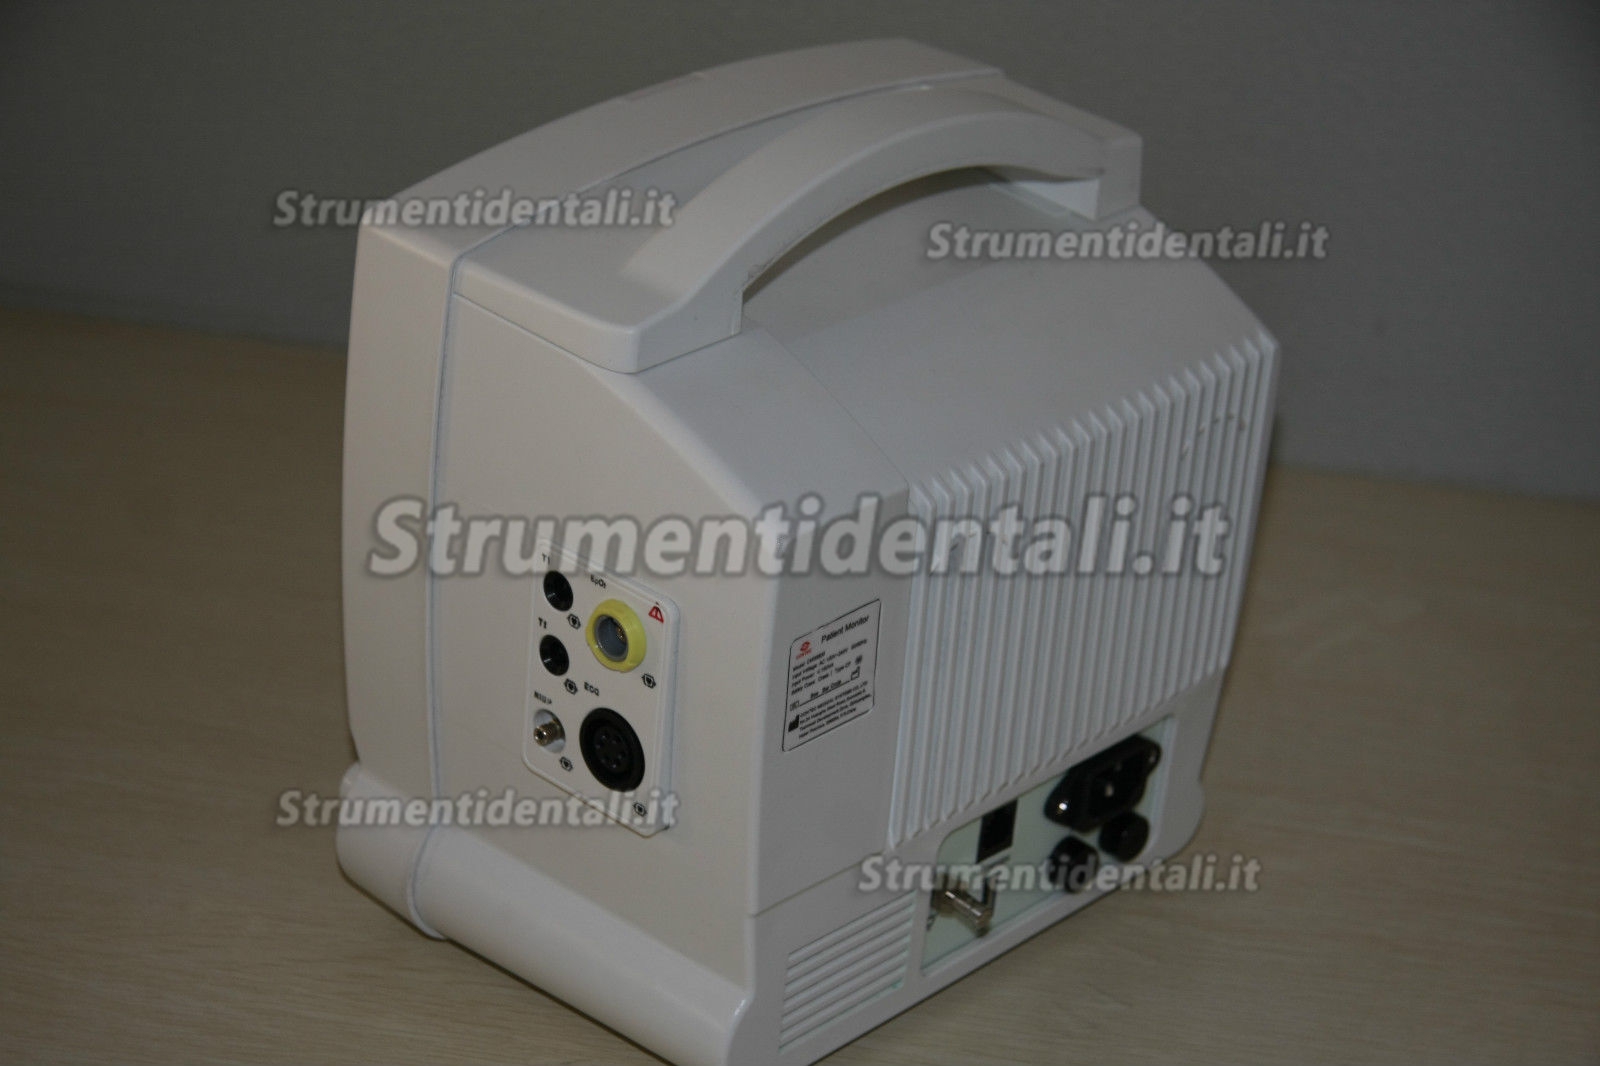 COMTEC® CMS6800 8″ Schermo Touch Monitor Multiparametrico paziente